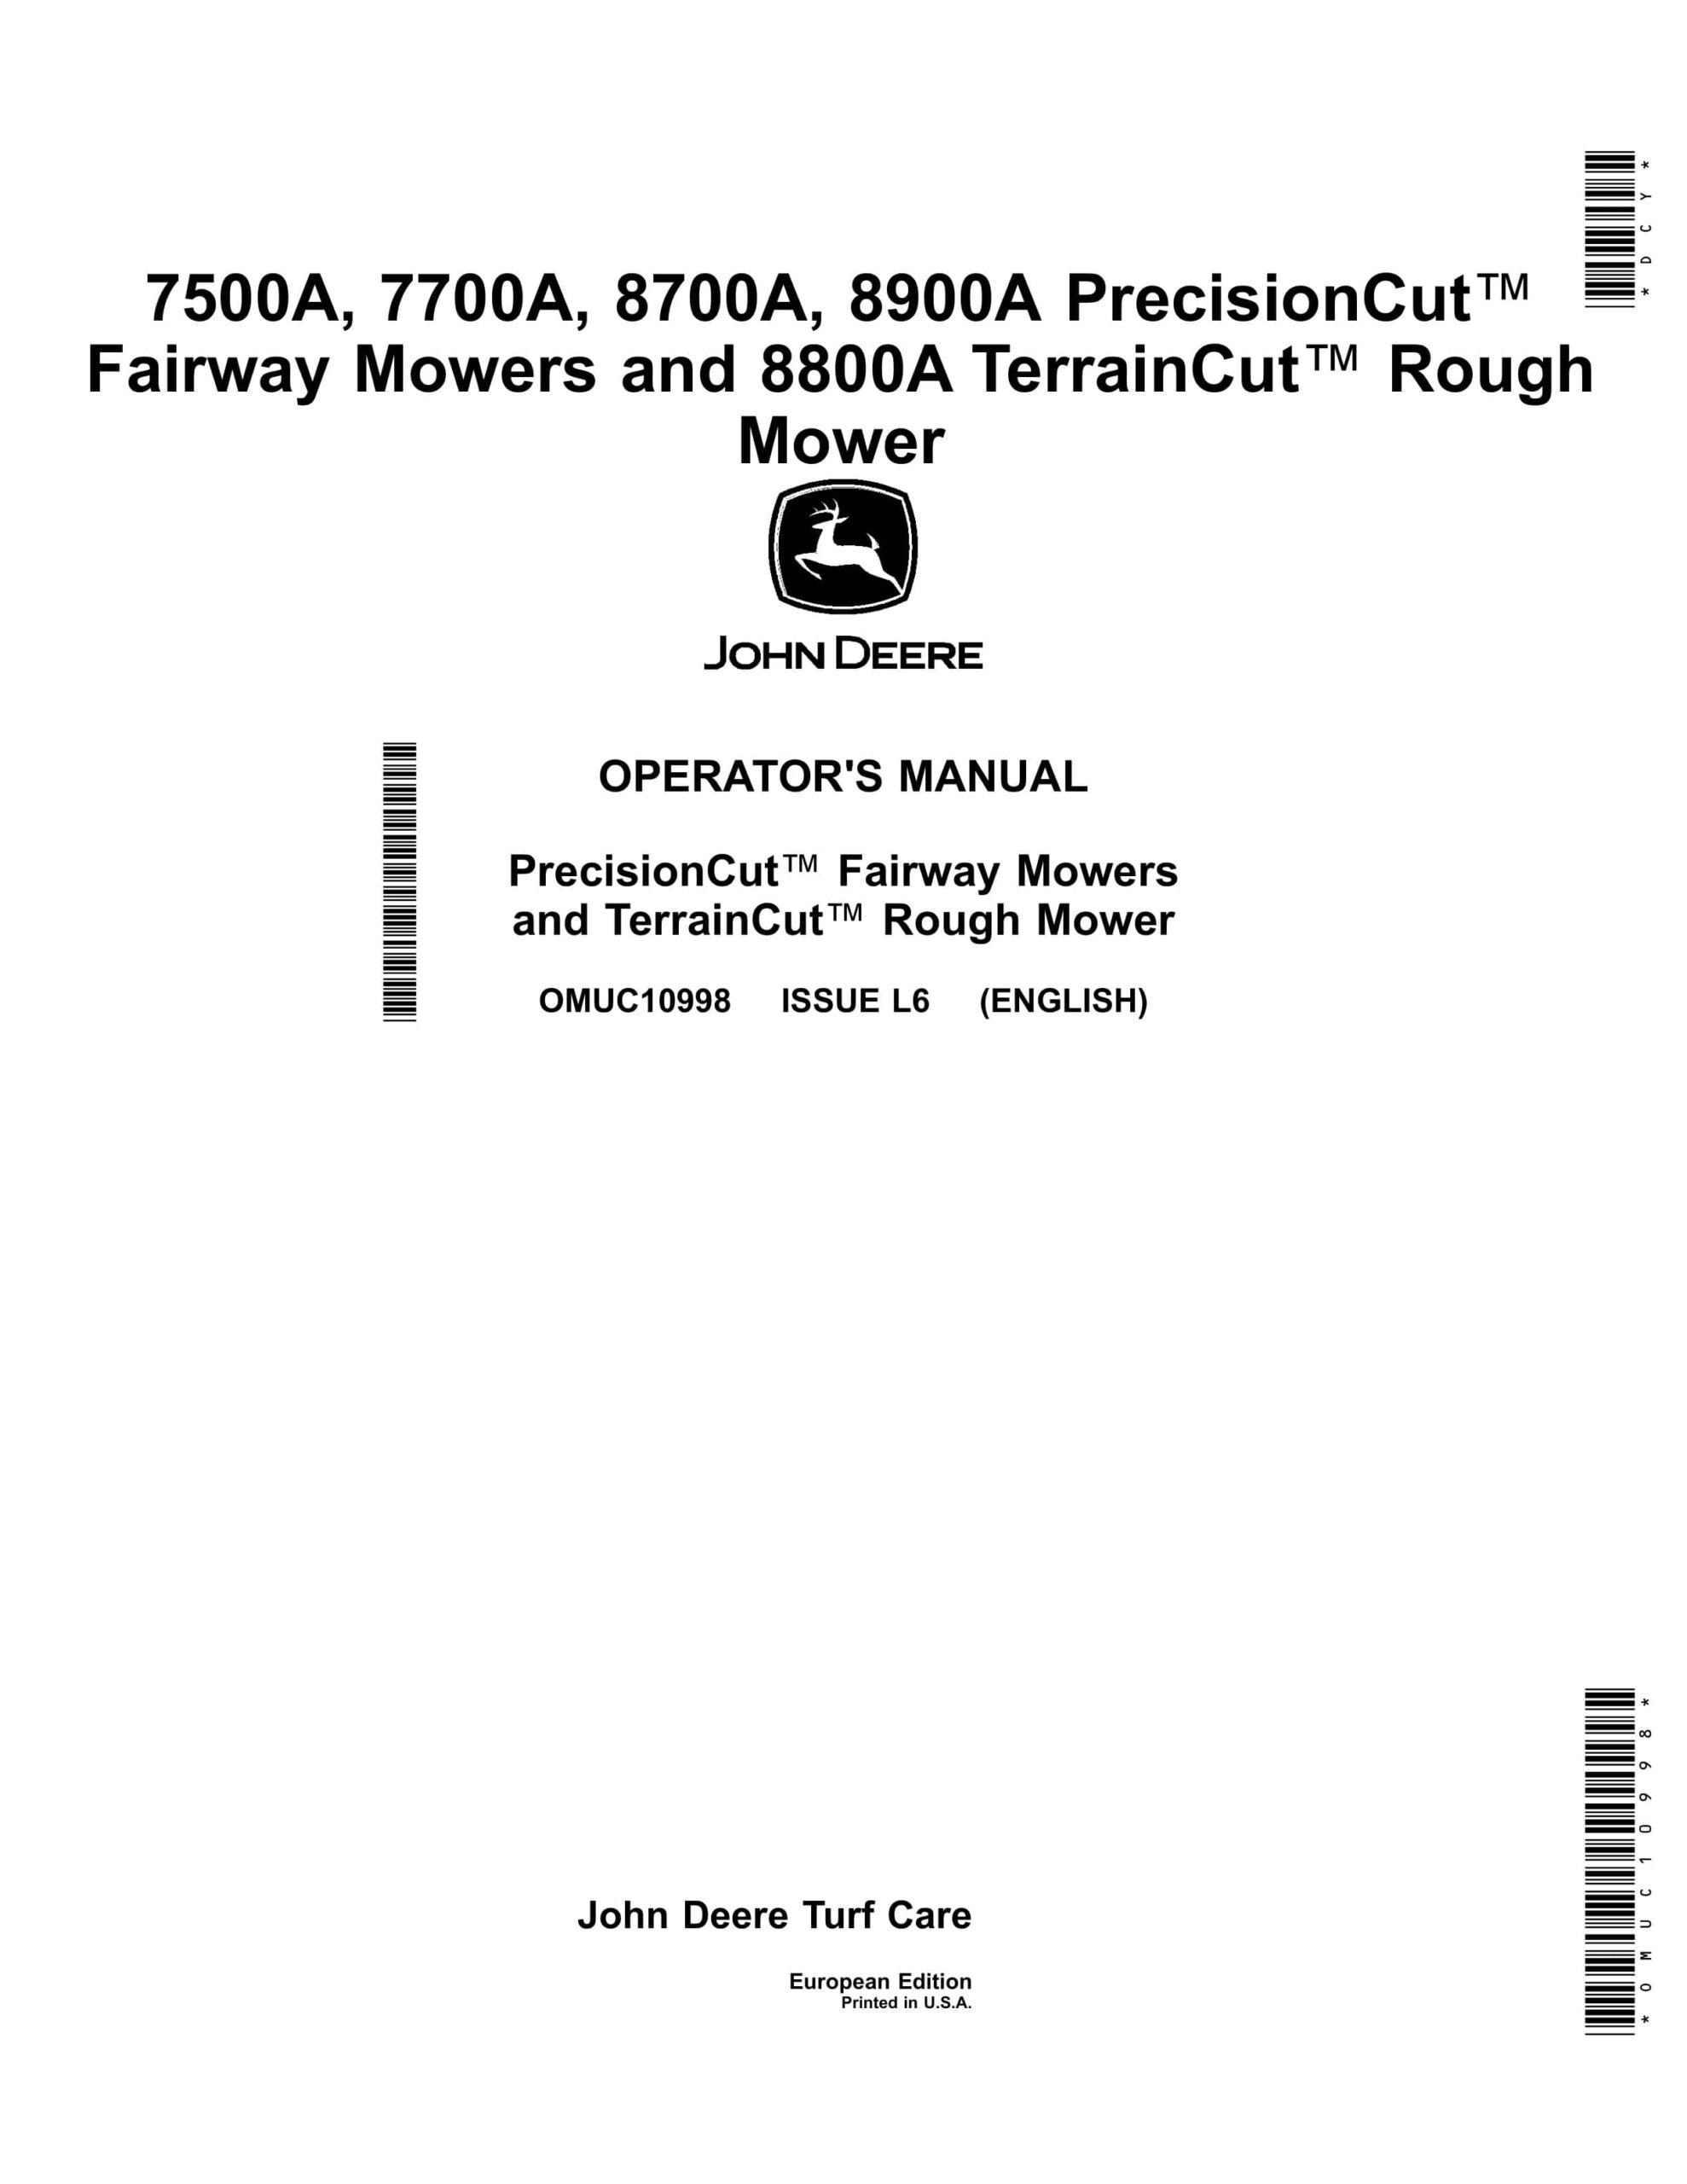 John Deere 7500A, 7700A, 8700A, 8900A PrecisionCut Fairway Mowers and 8800A TerrainCut Rough Mower Operator Manual OMUC10998-1